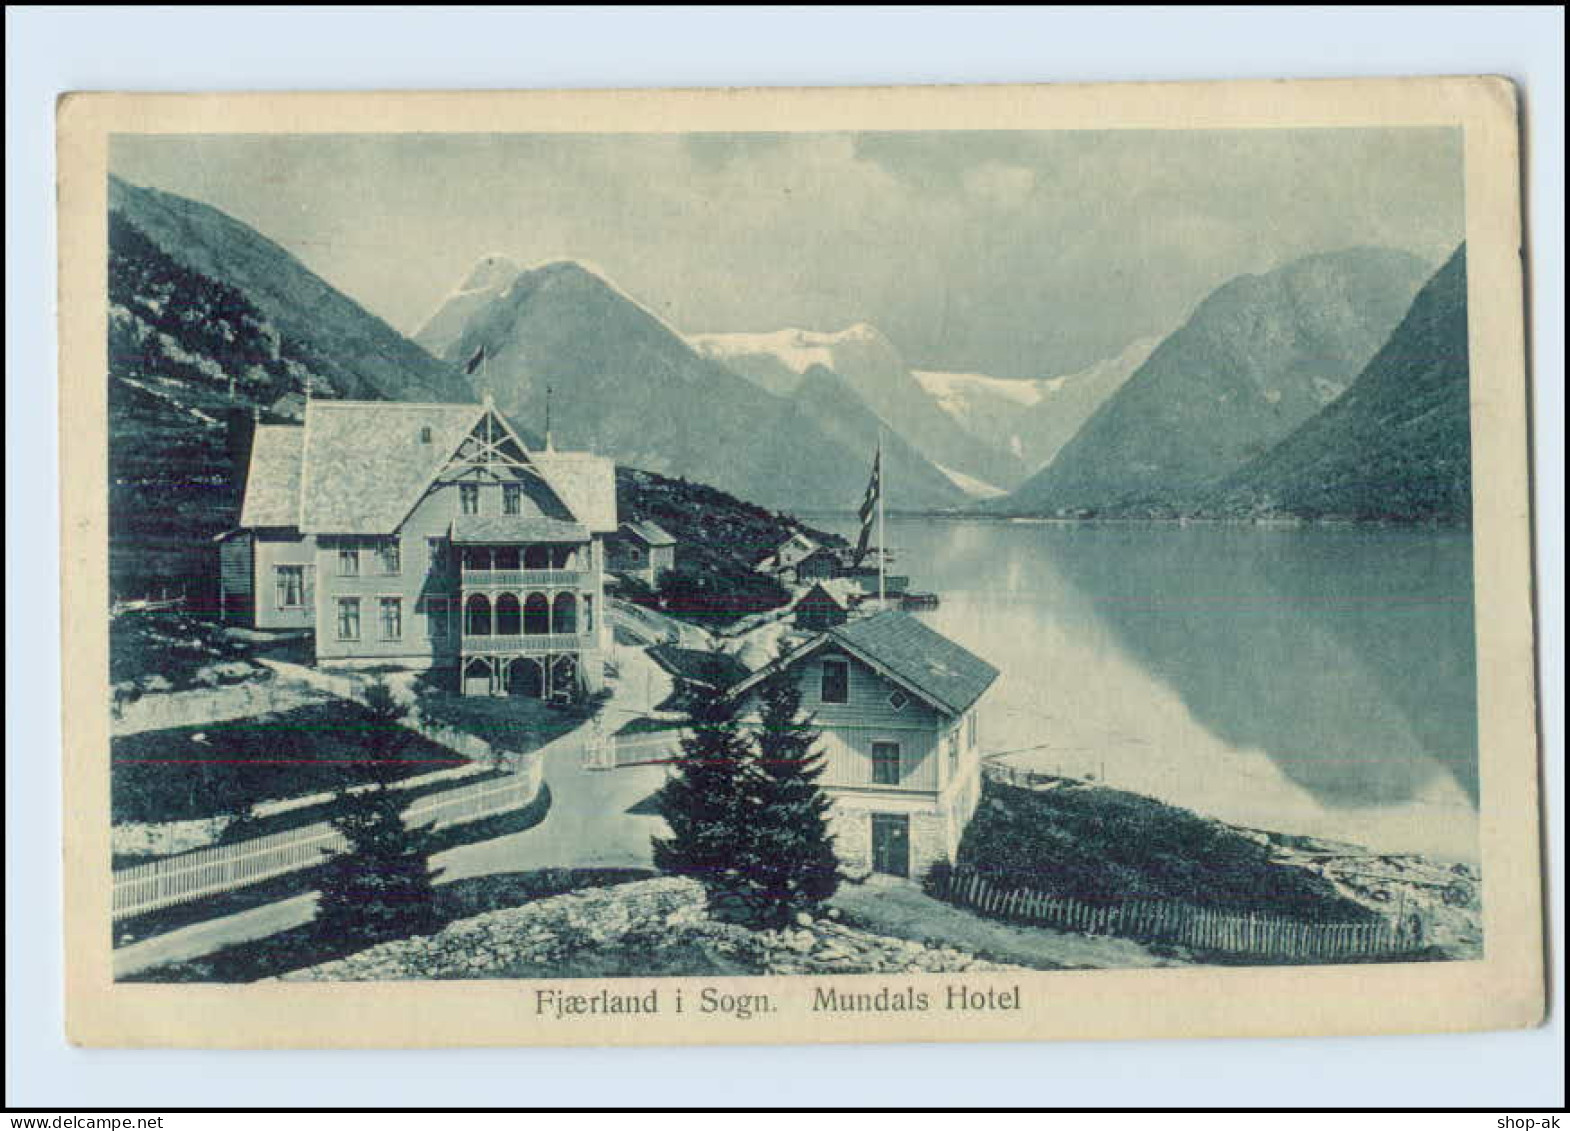 N011/ Fjaerland I Sogn In Norwegen, Mundals Hotel AK 1911 - Norvège